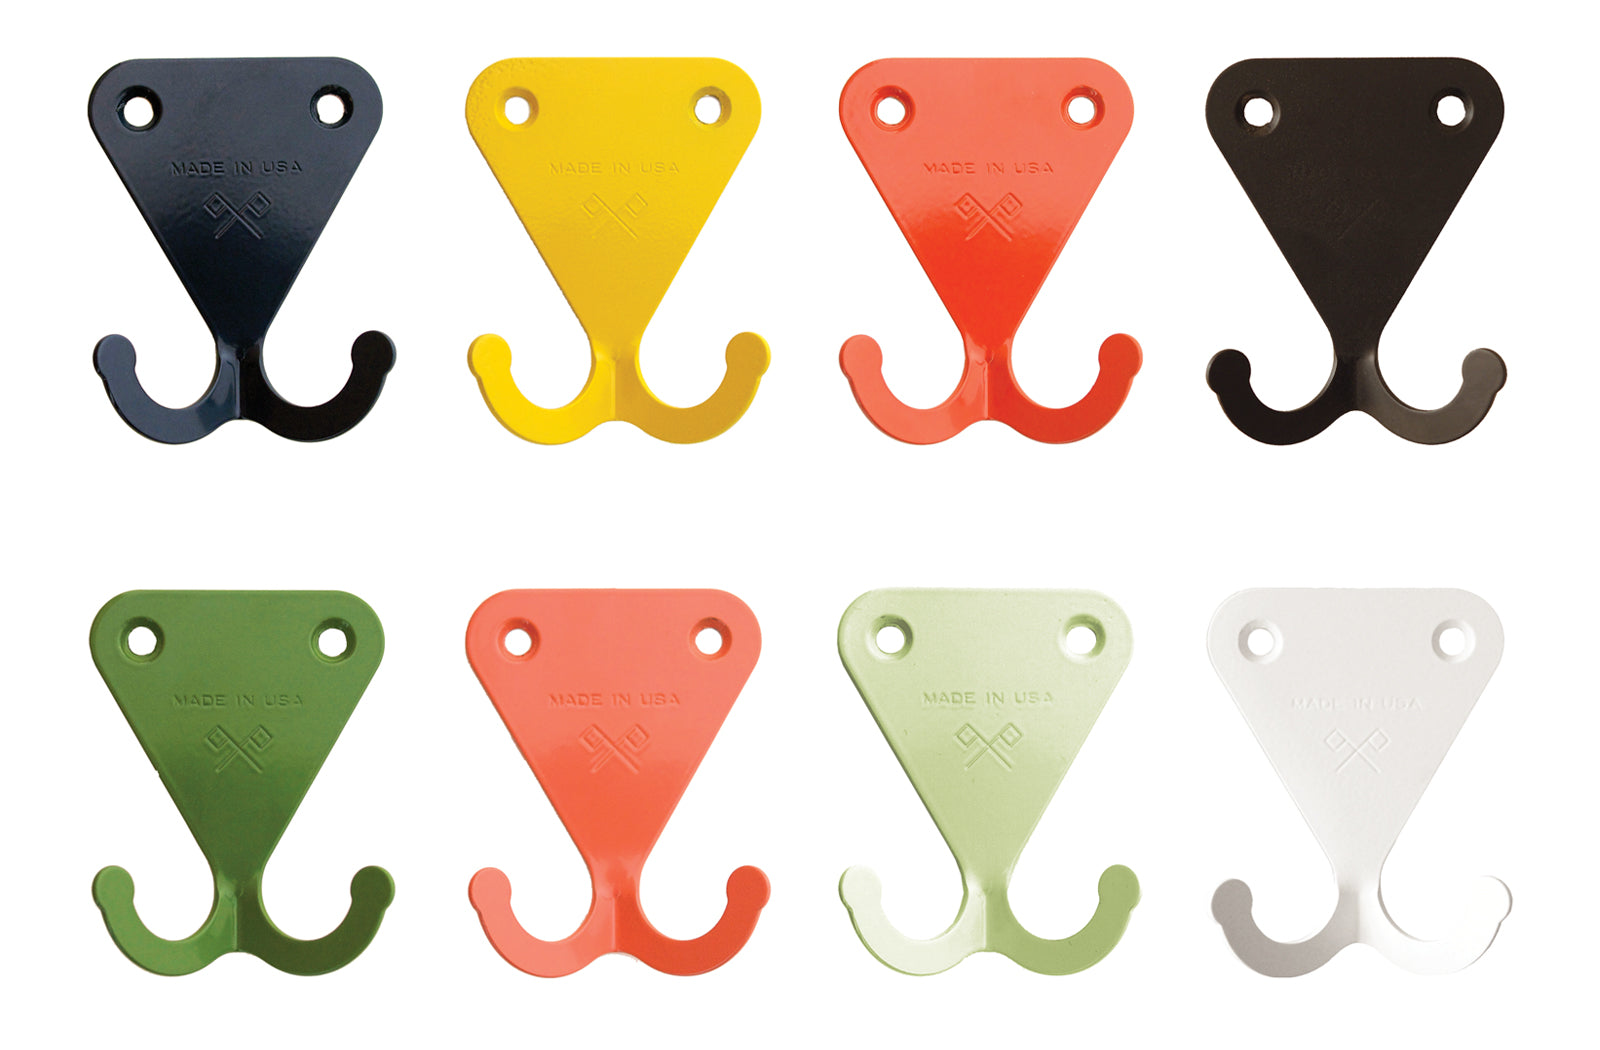 Buy Online: S-Hooks (Steel, Zinc-Coated) Metal S Shaped Hook for Hanging